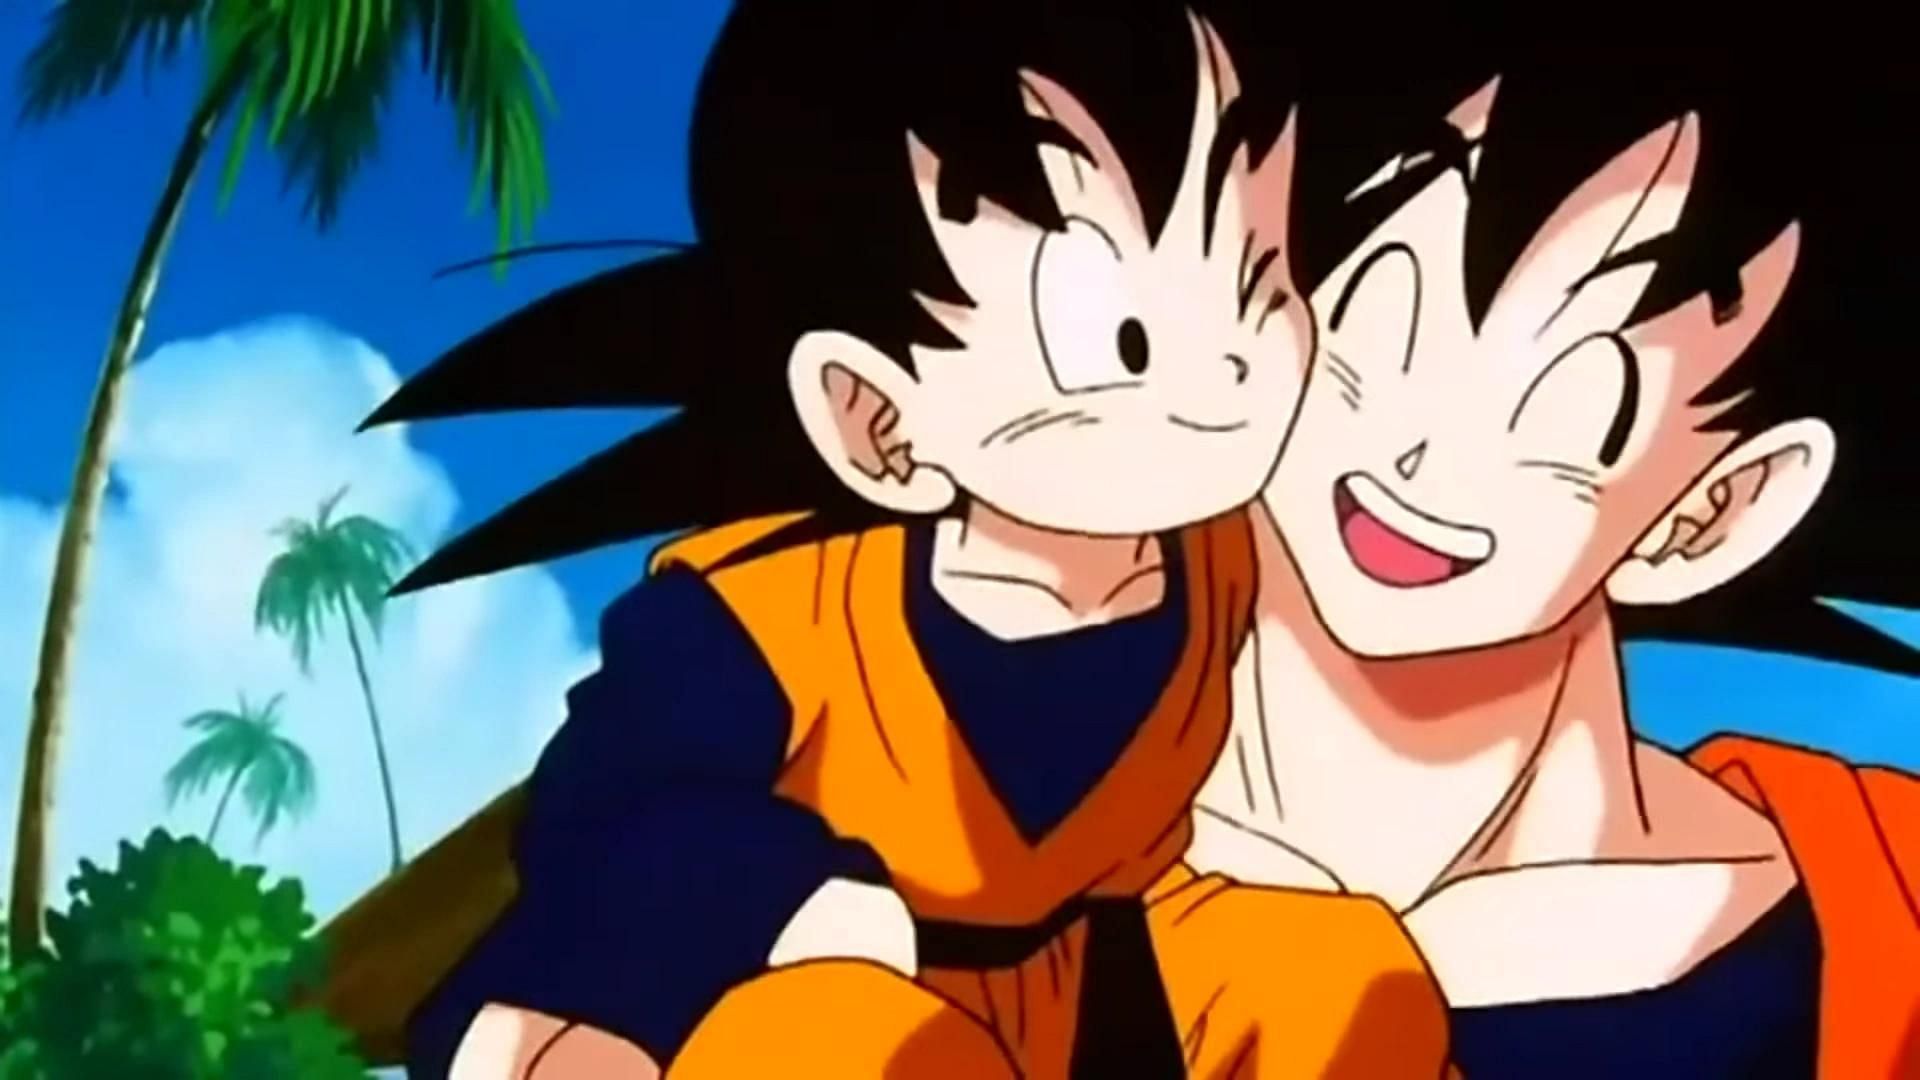 Goten and Goku (Image via Toei Animation)